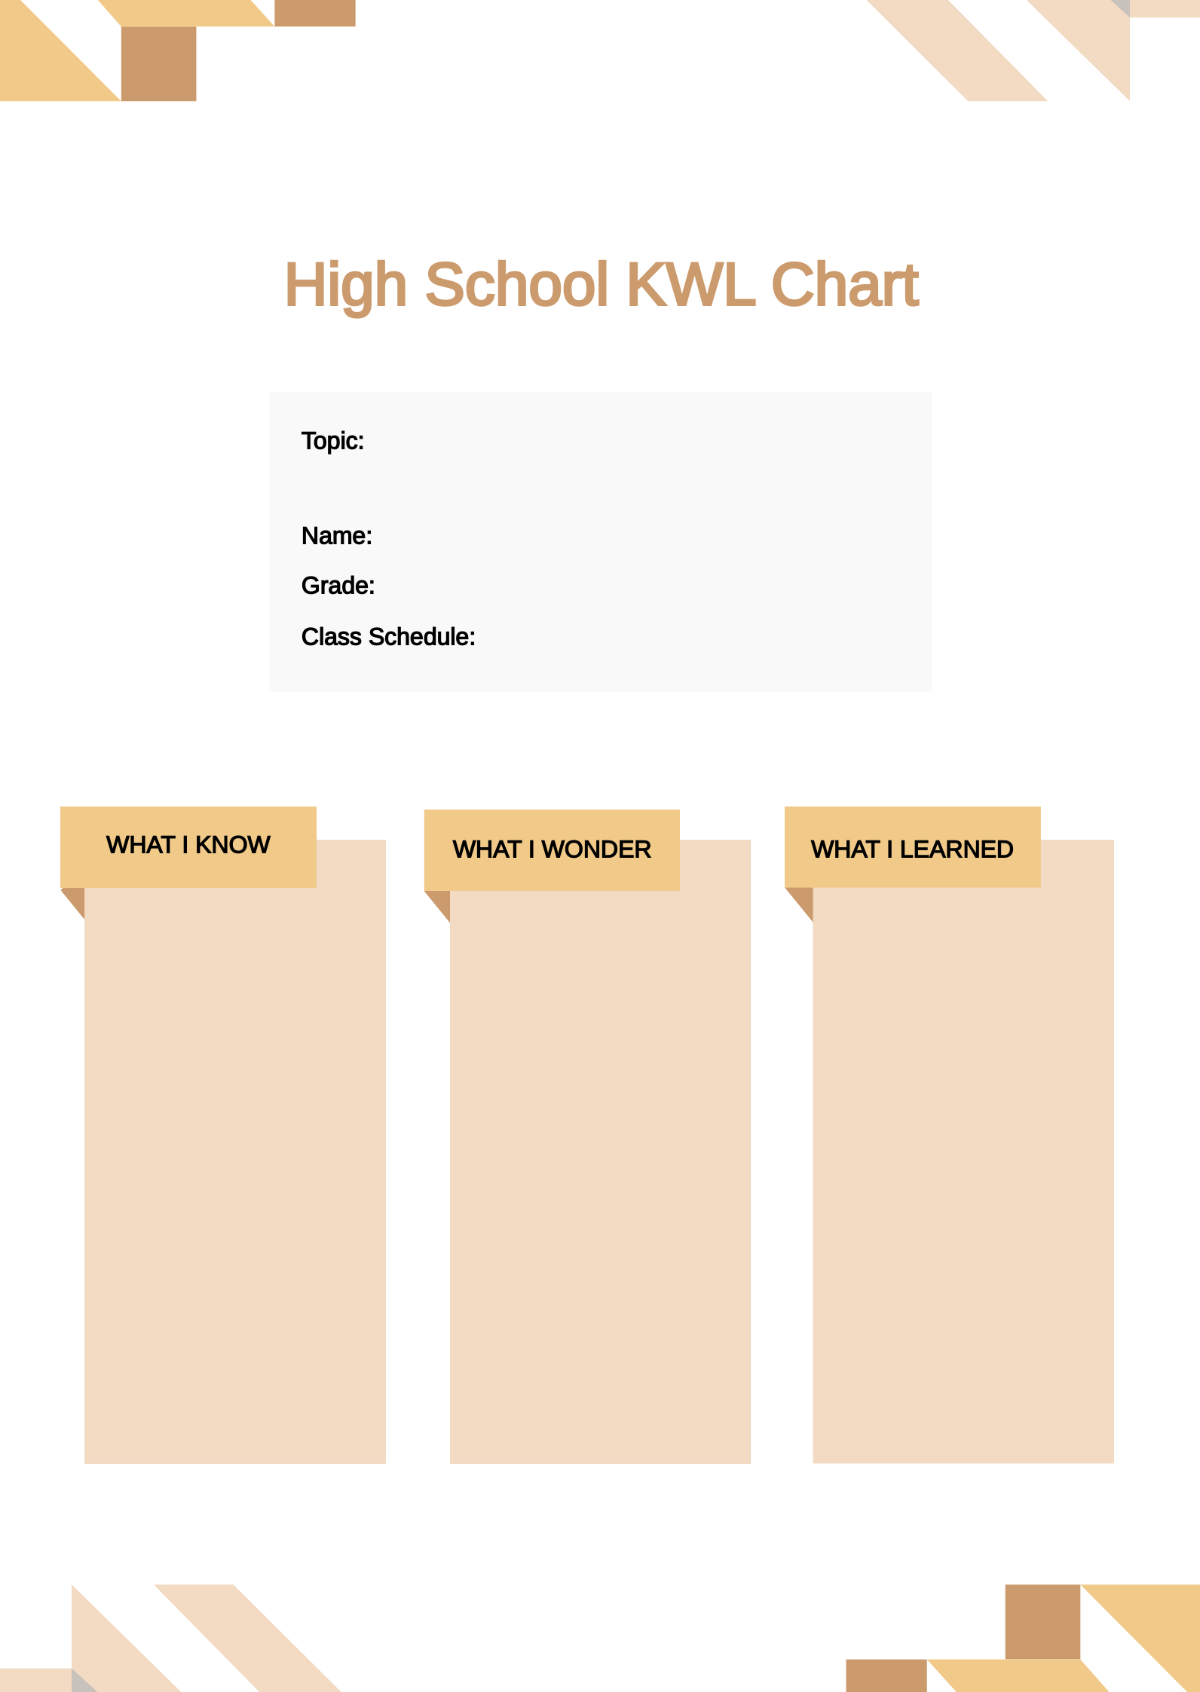 High School KWL Chart Template